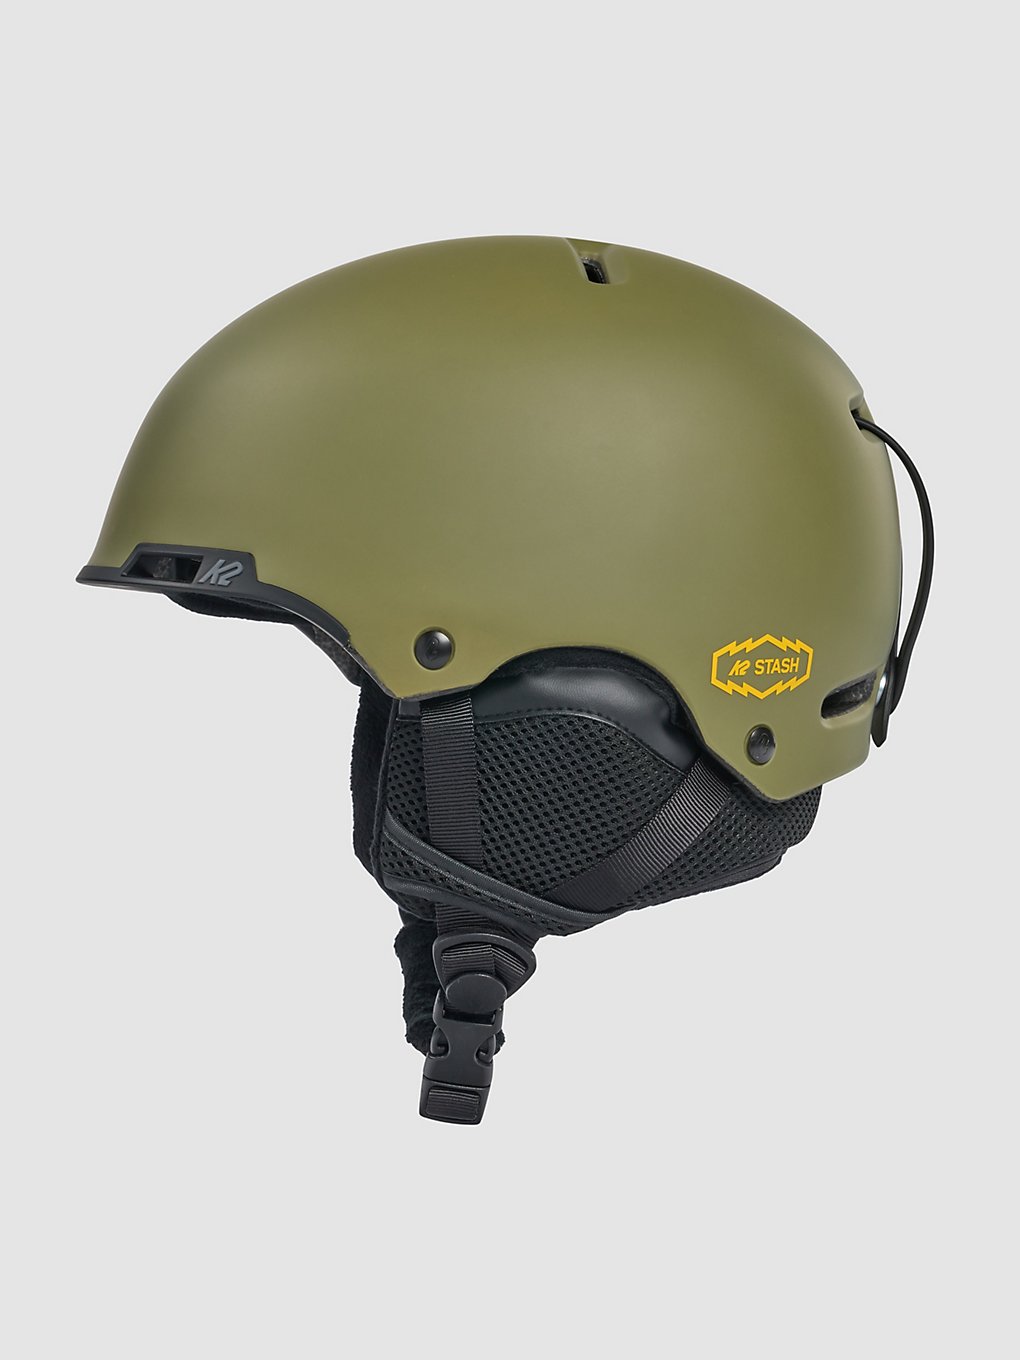 K2 Stash Helm olive drab kaufen